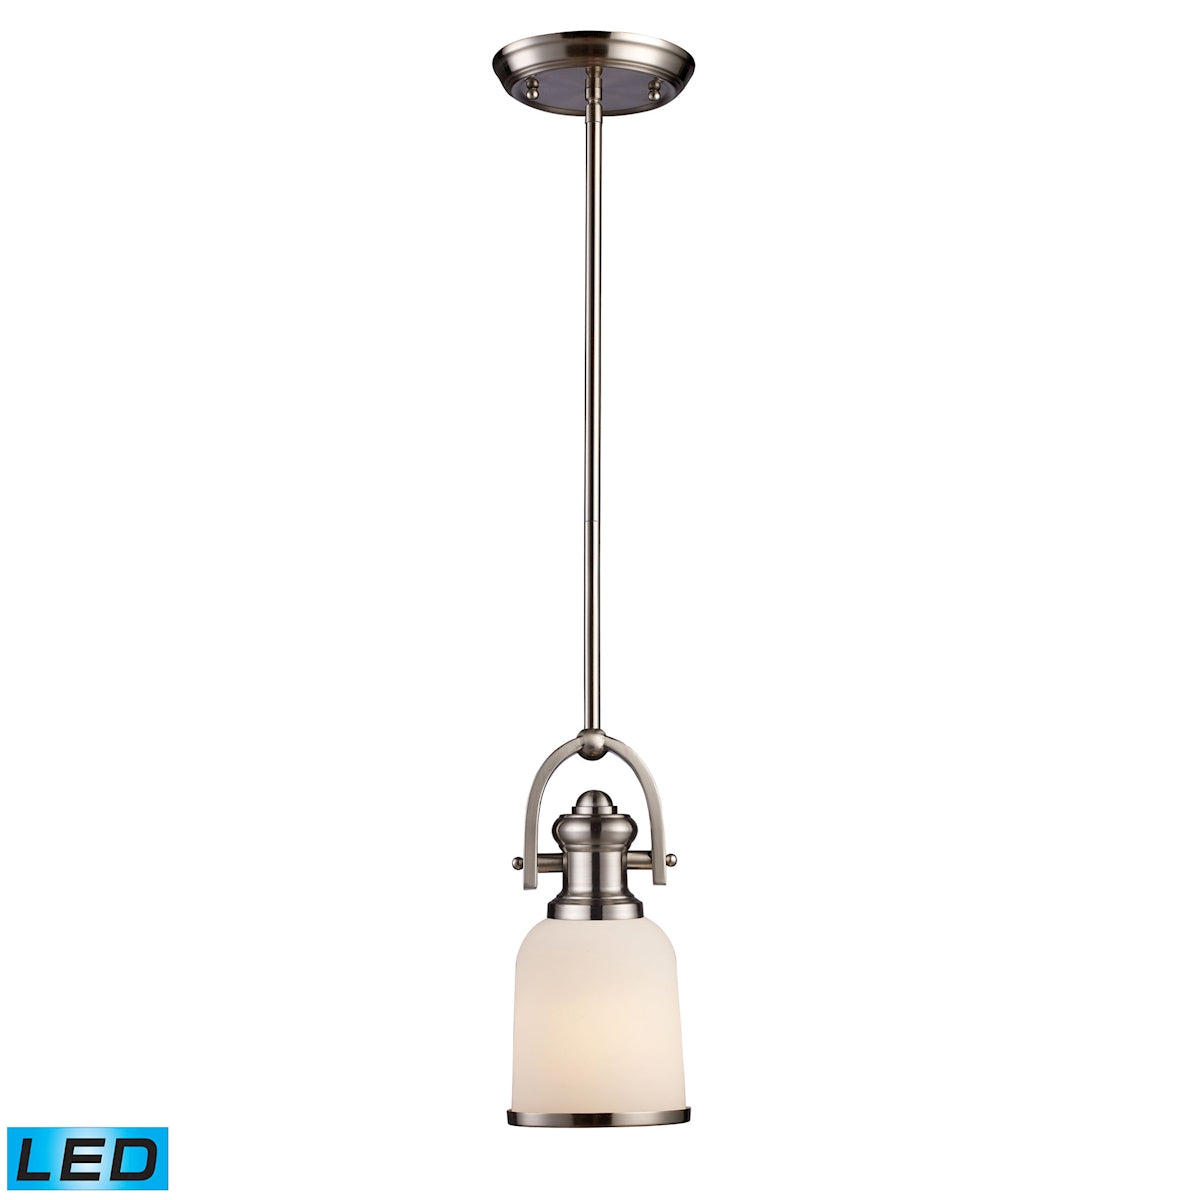 ELK Lighting 66161-1-LED Brooksdale 1-Light Mini Pendant in Satin Nickel with White Glass - Includes LED Bulb